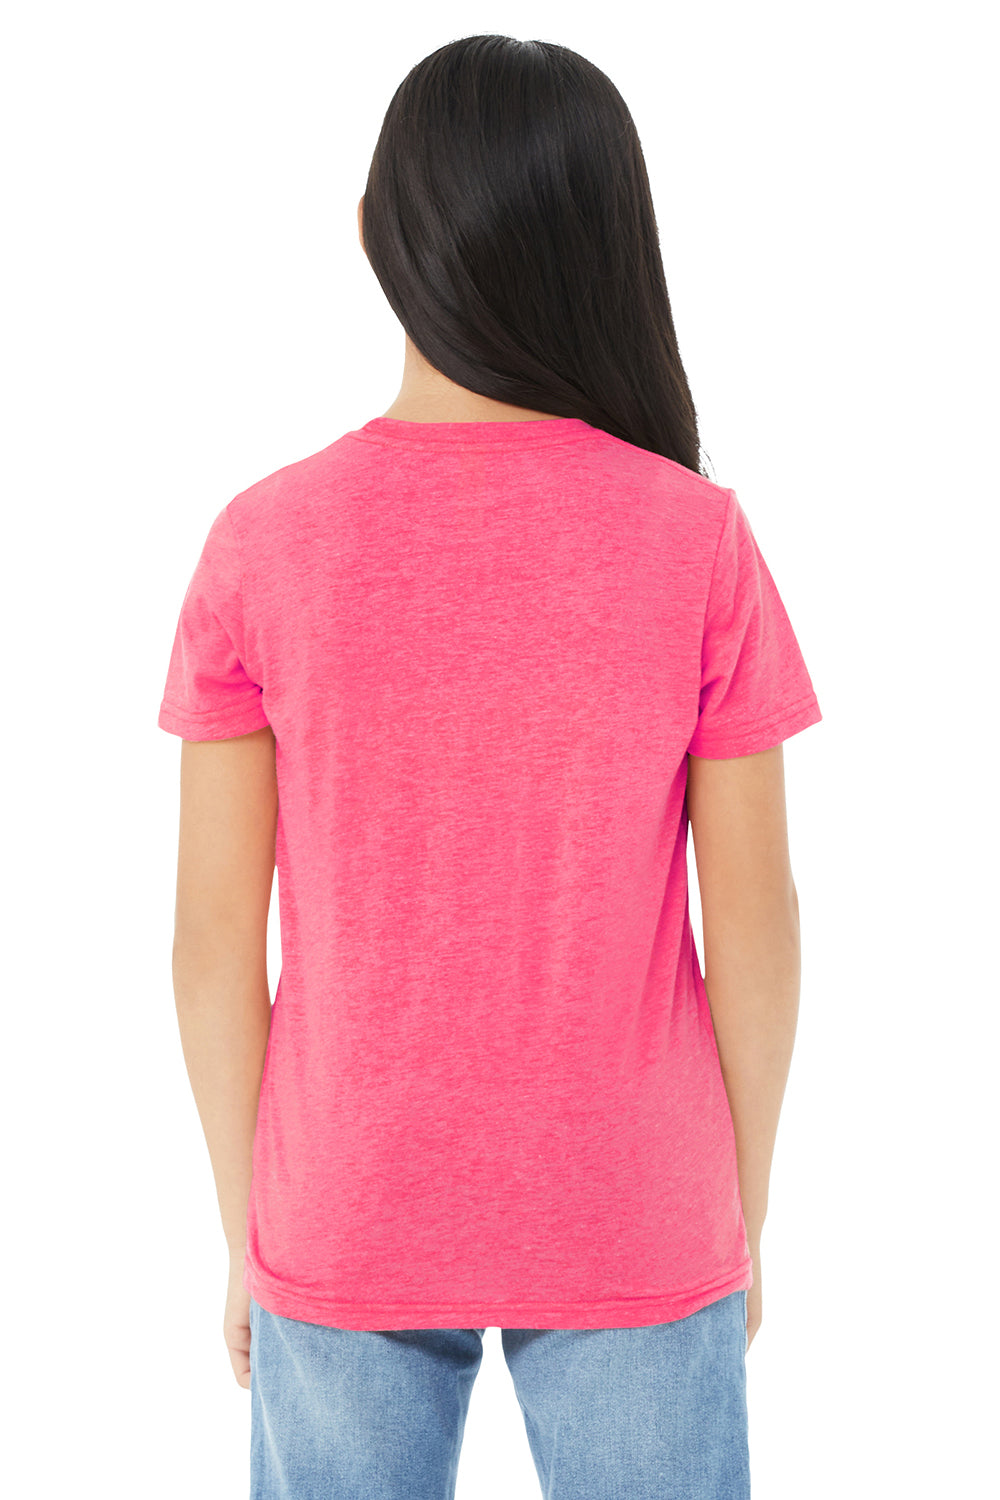 Bella + Canvas 3413Y Youth Short Sleeve Crewneck T-Shirt Charity Pink Model Back